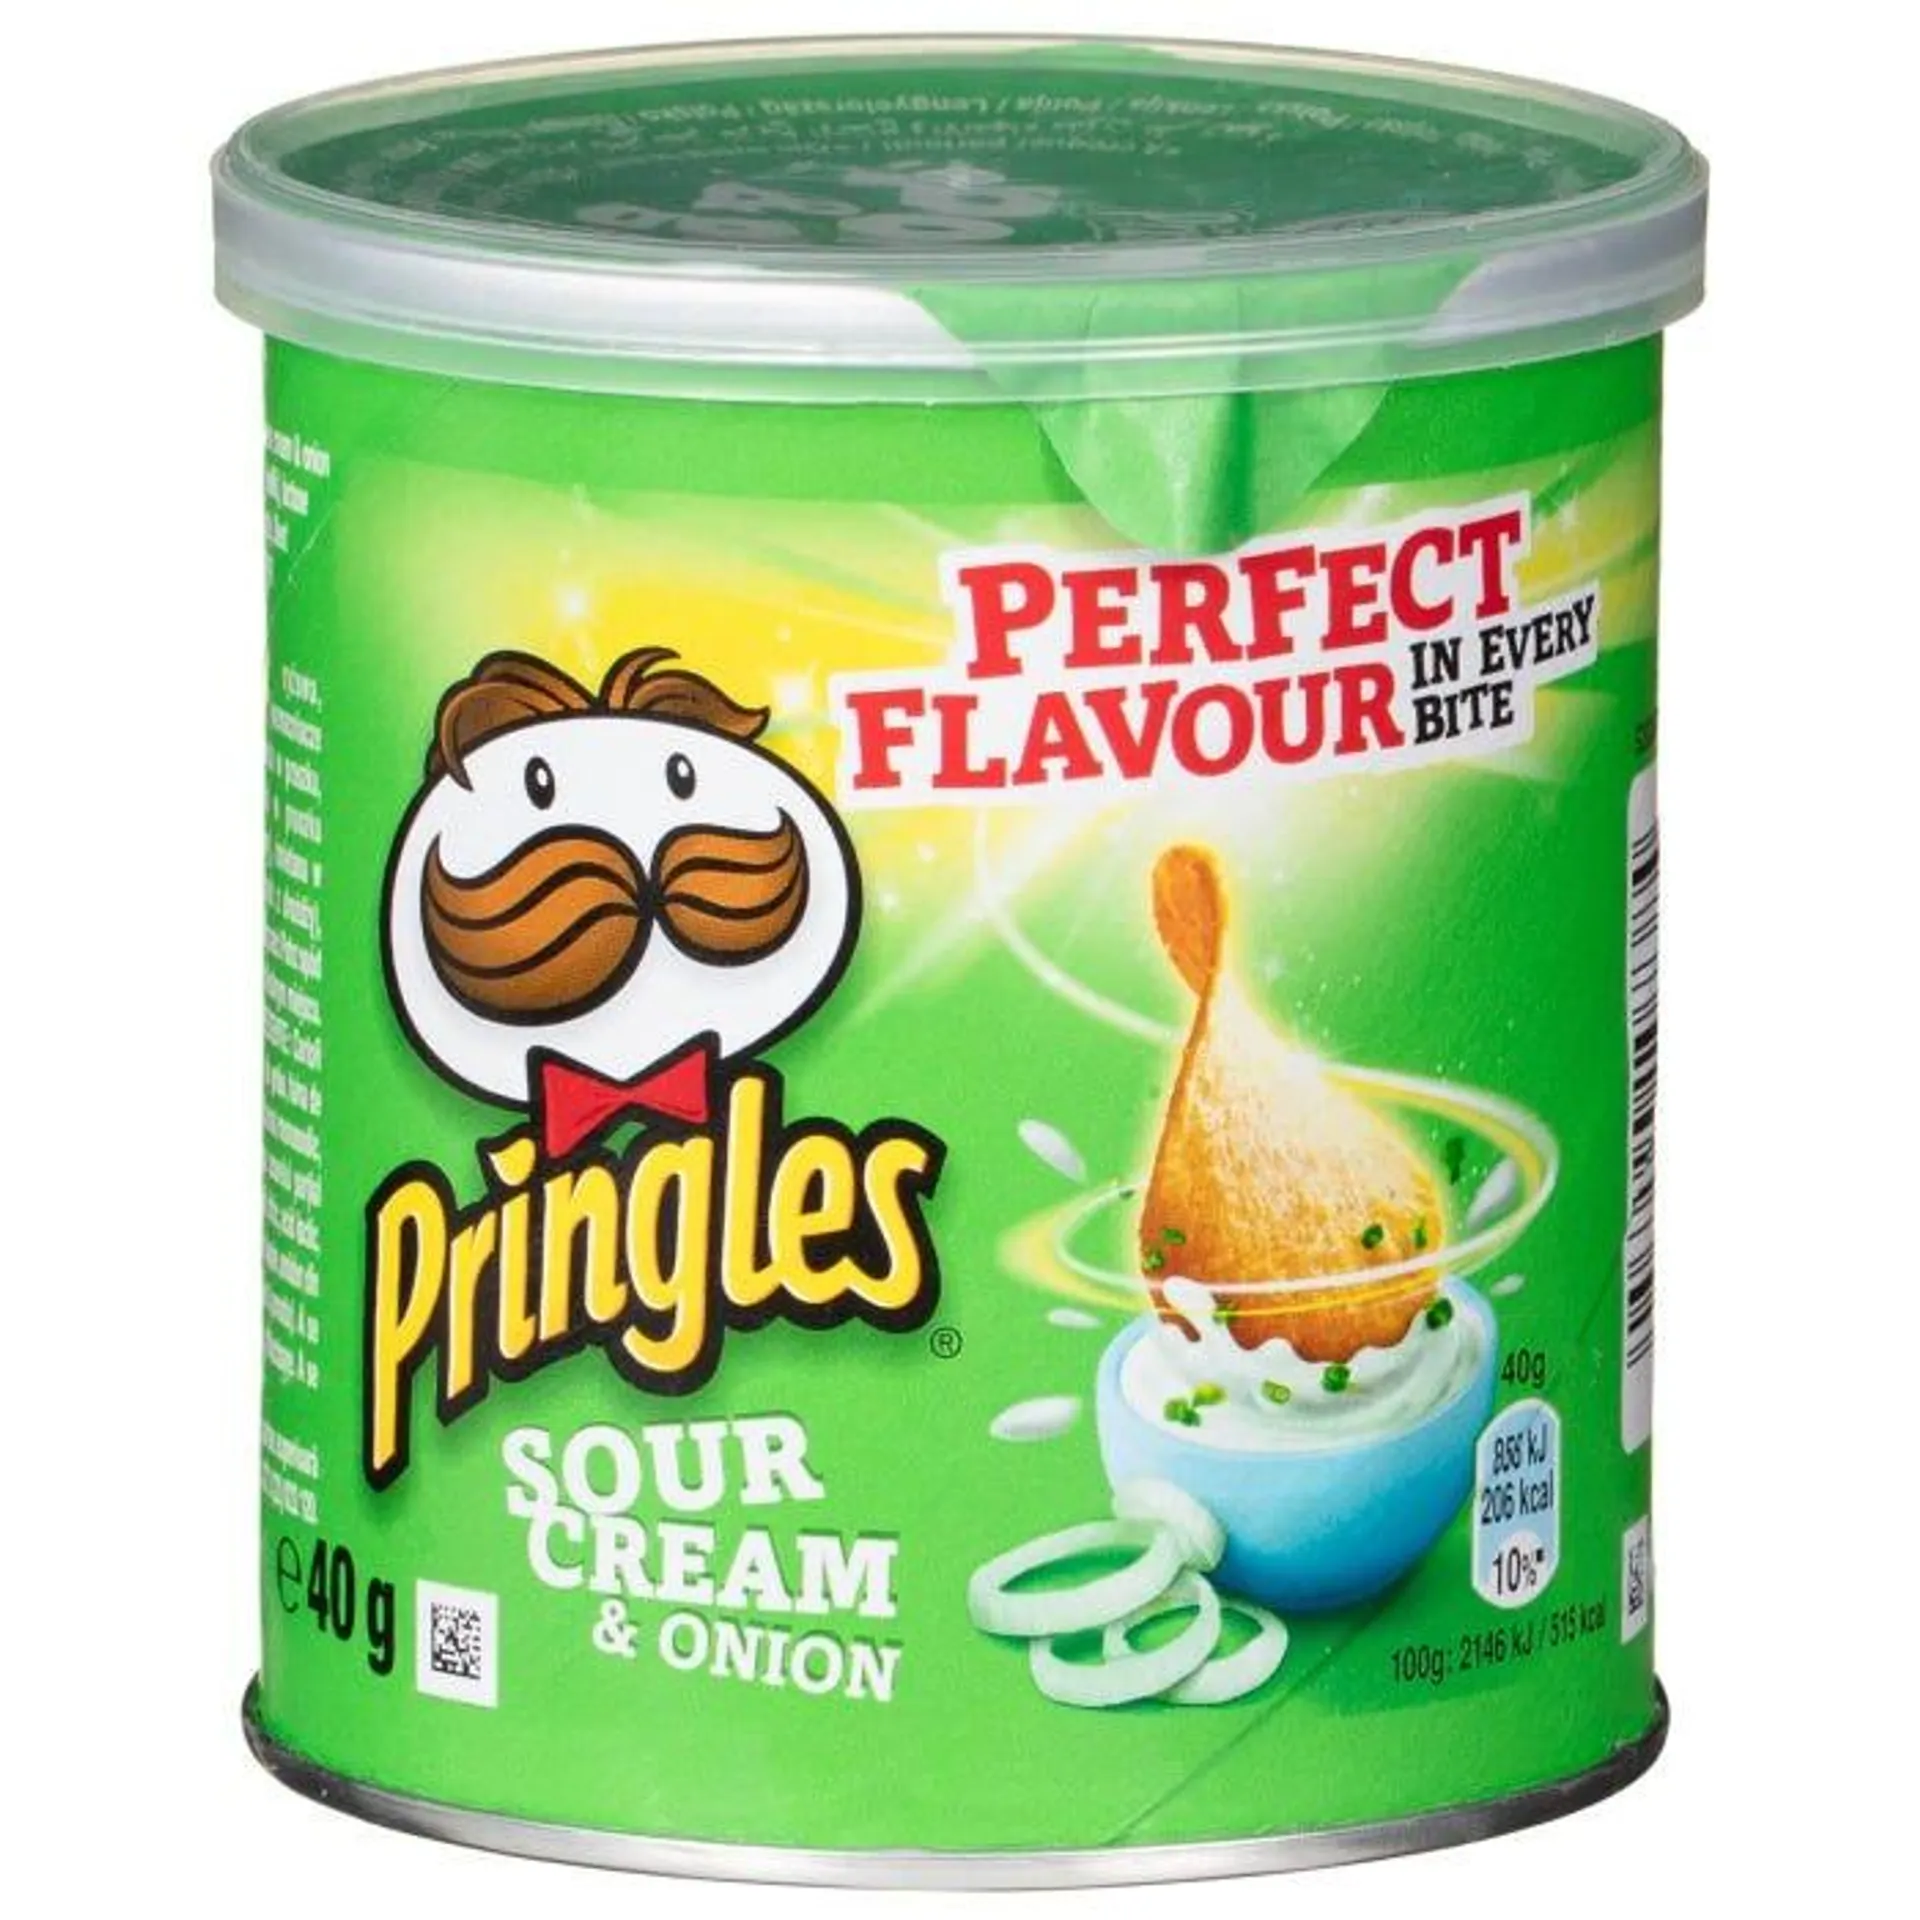 Pringles Sour Cream and Onion Tub 40g